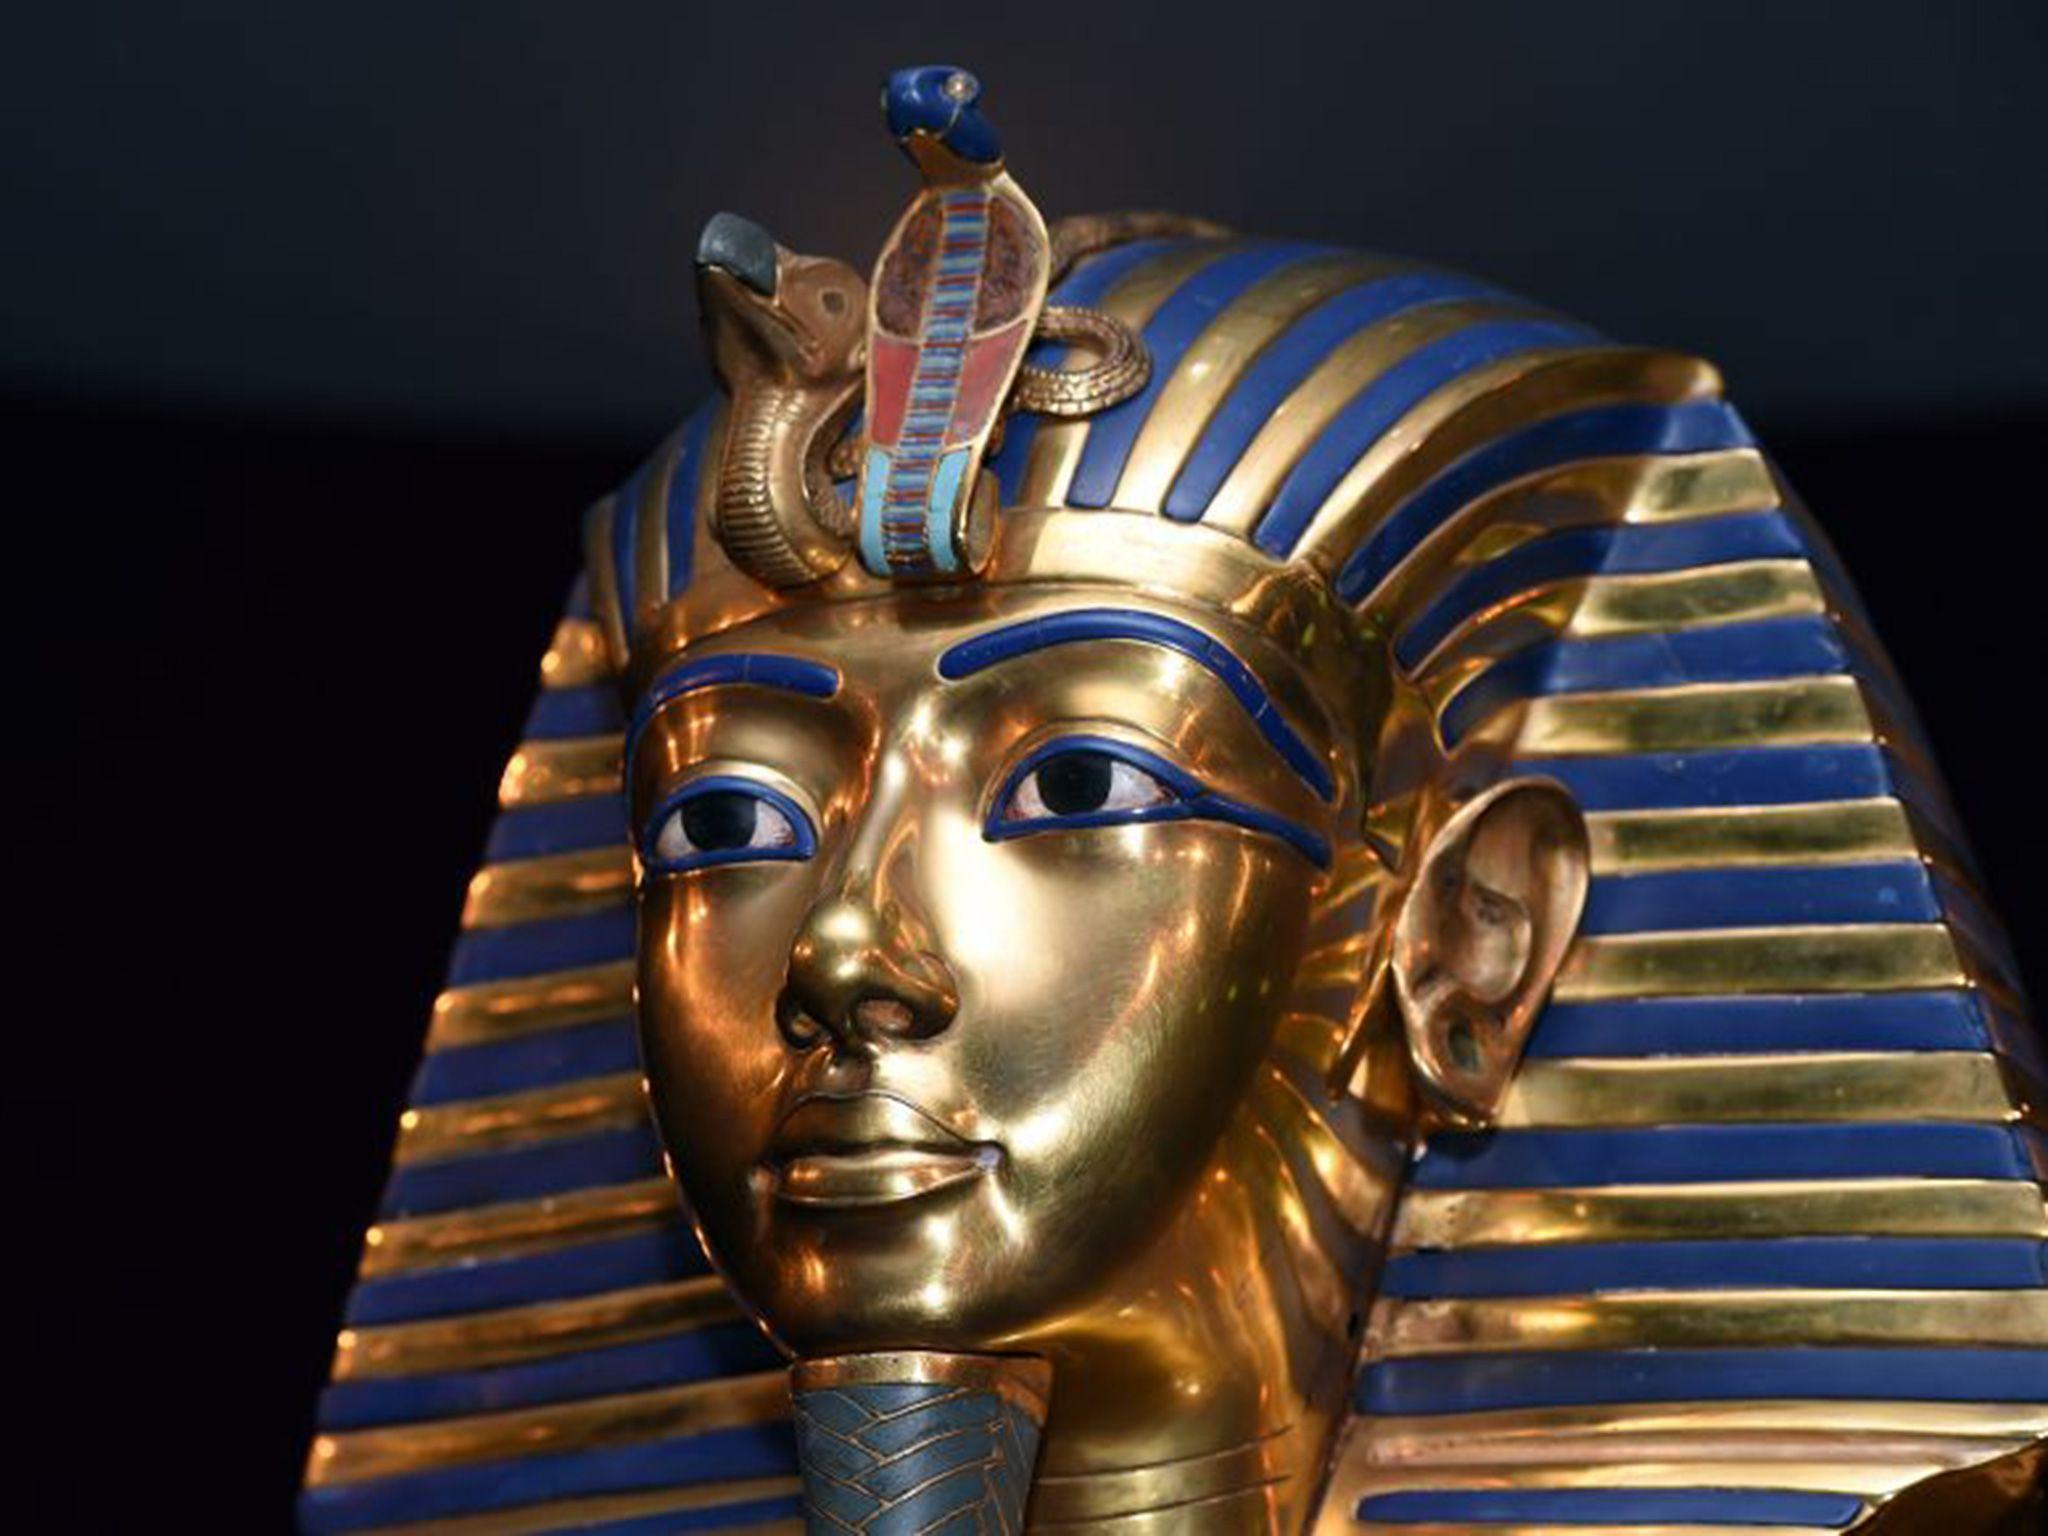 Tutankhamun: Great golden face mask was actually made